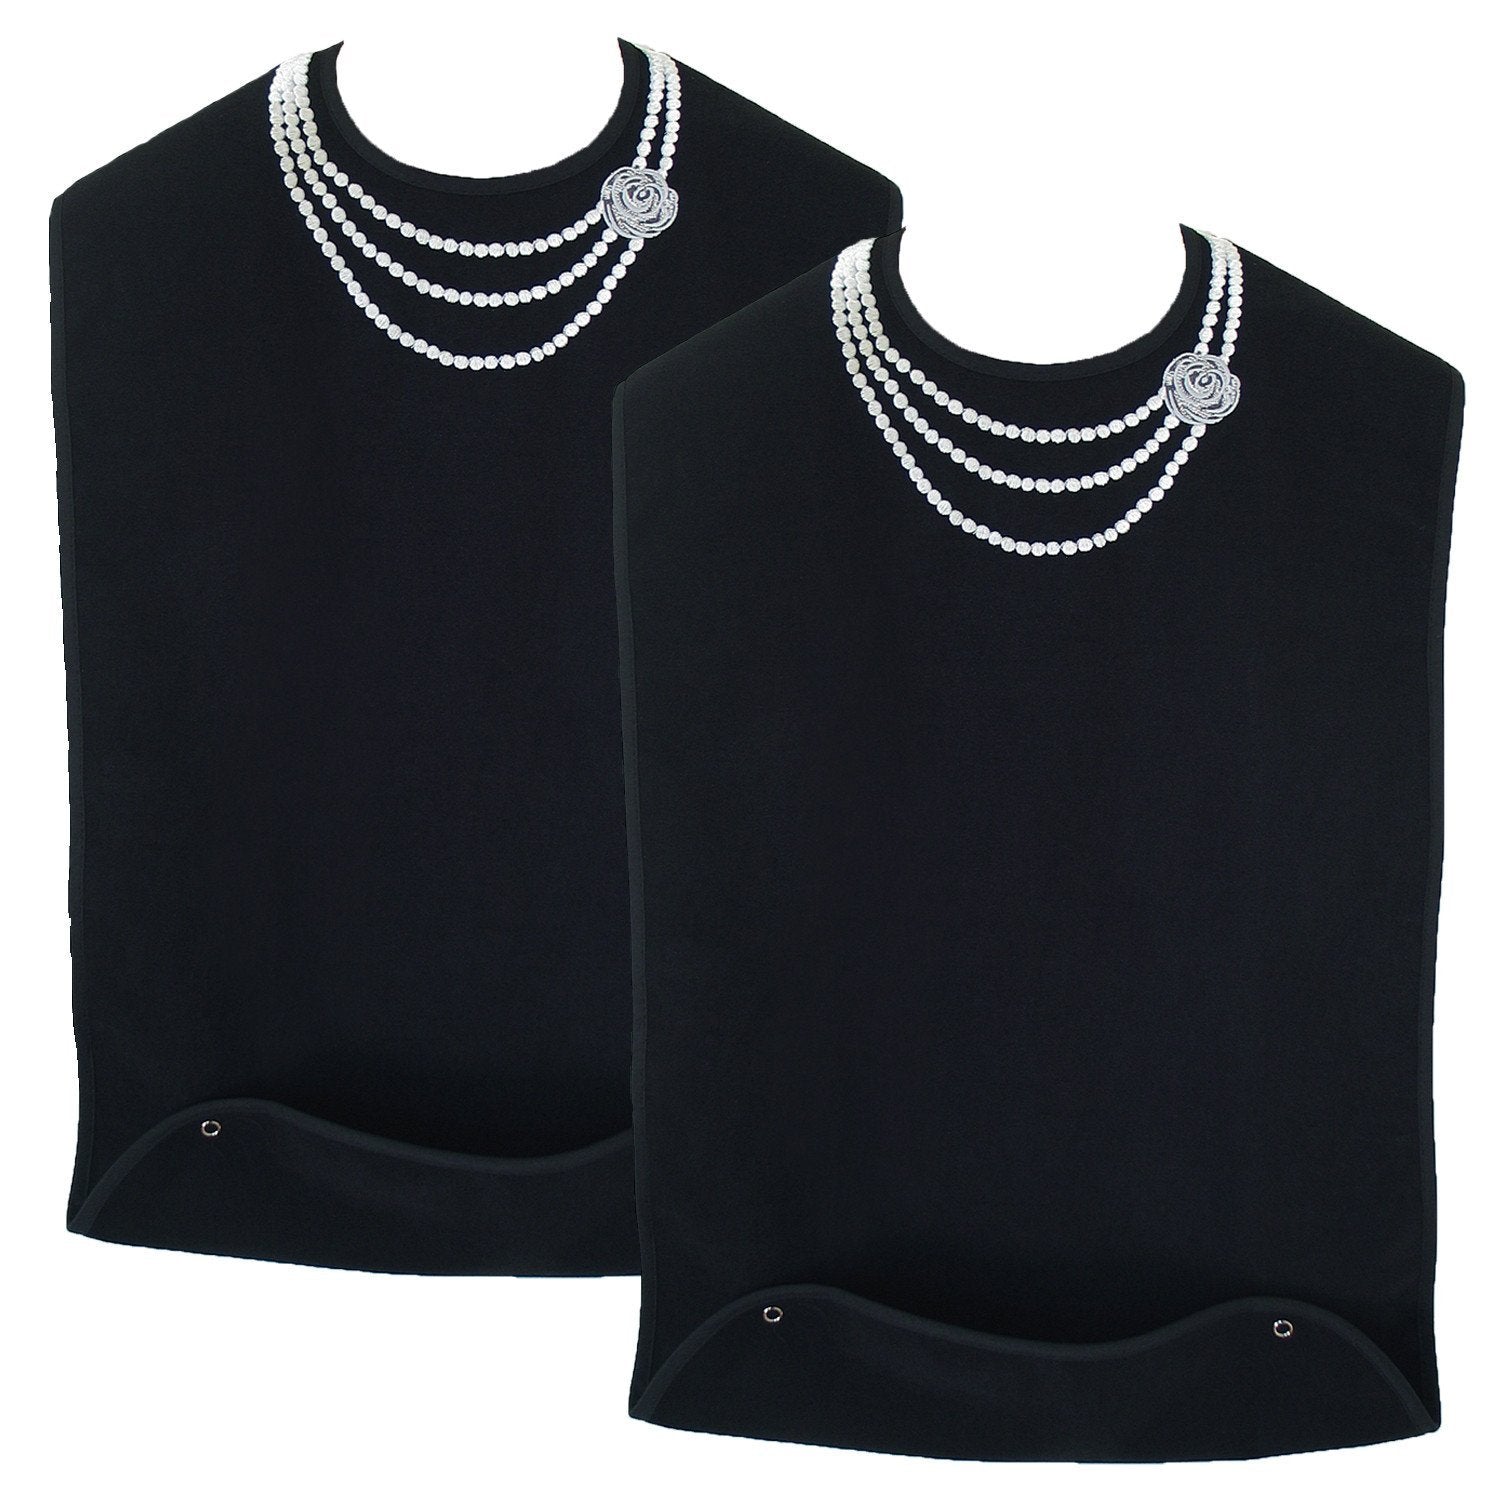 Women's Dress 'n Dine™ Adult Bibs with Pearl Necklace (2 Pack) - Classy Pal Dress 'n Dine Adult Bibs